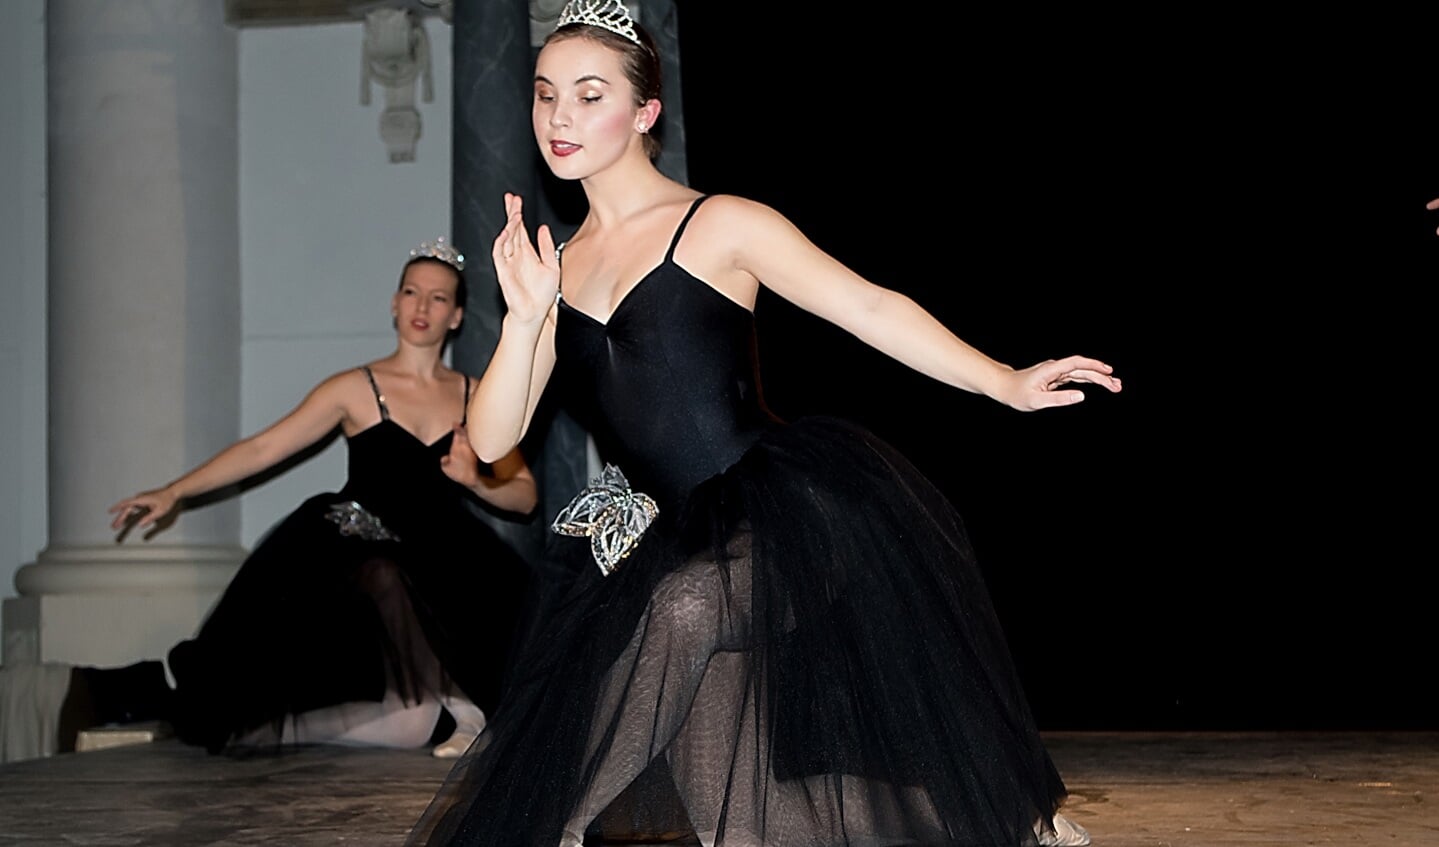 Danseresen van balletstudio Giselle in de Dorpskerk.